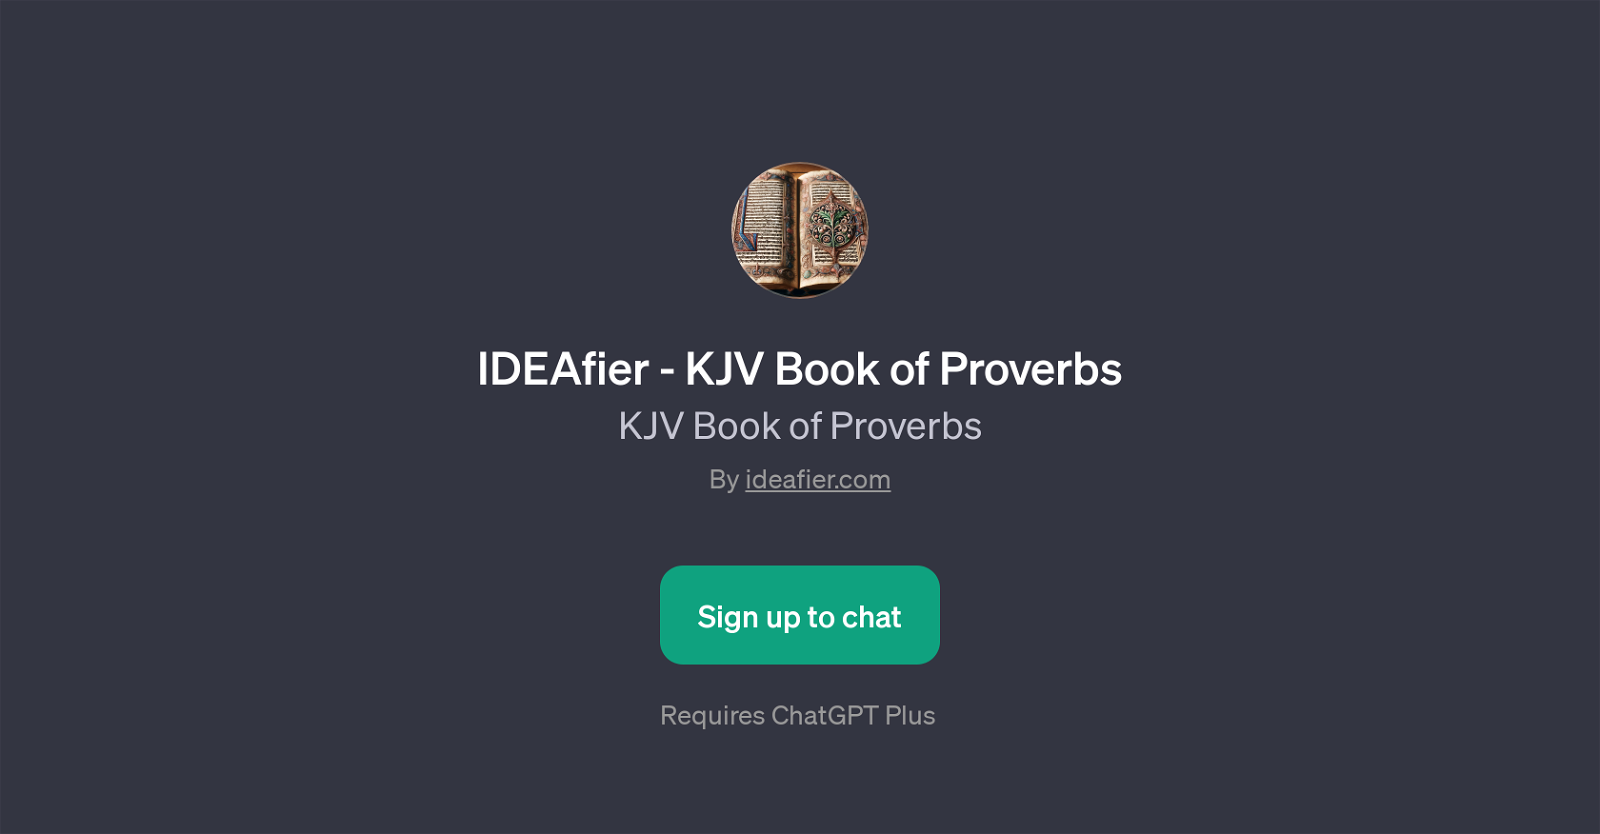 IDEAfier - KJV Book of Proverbs website